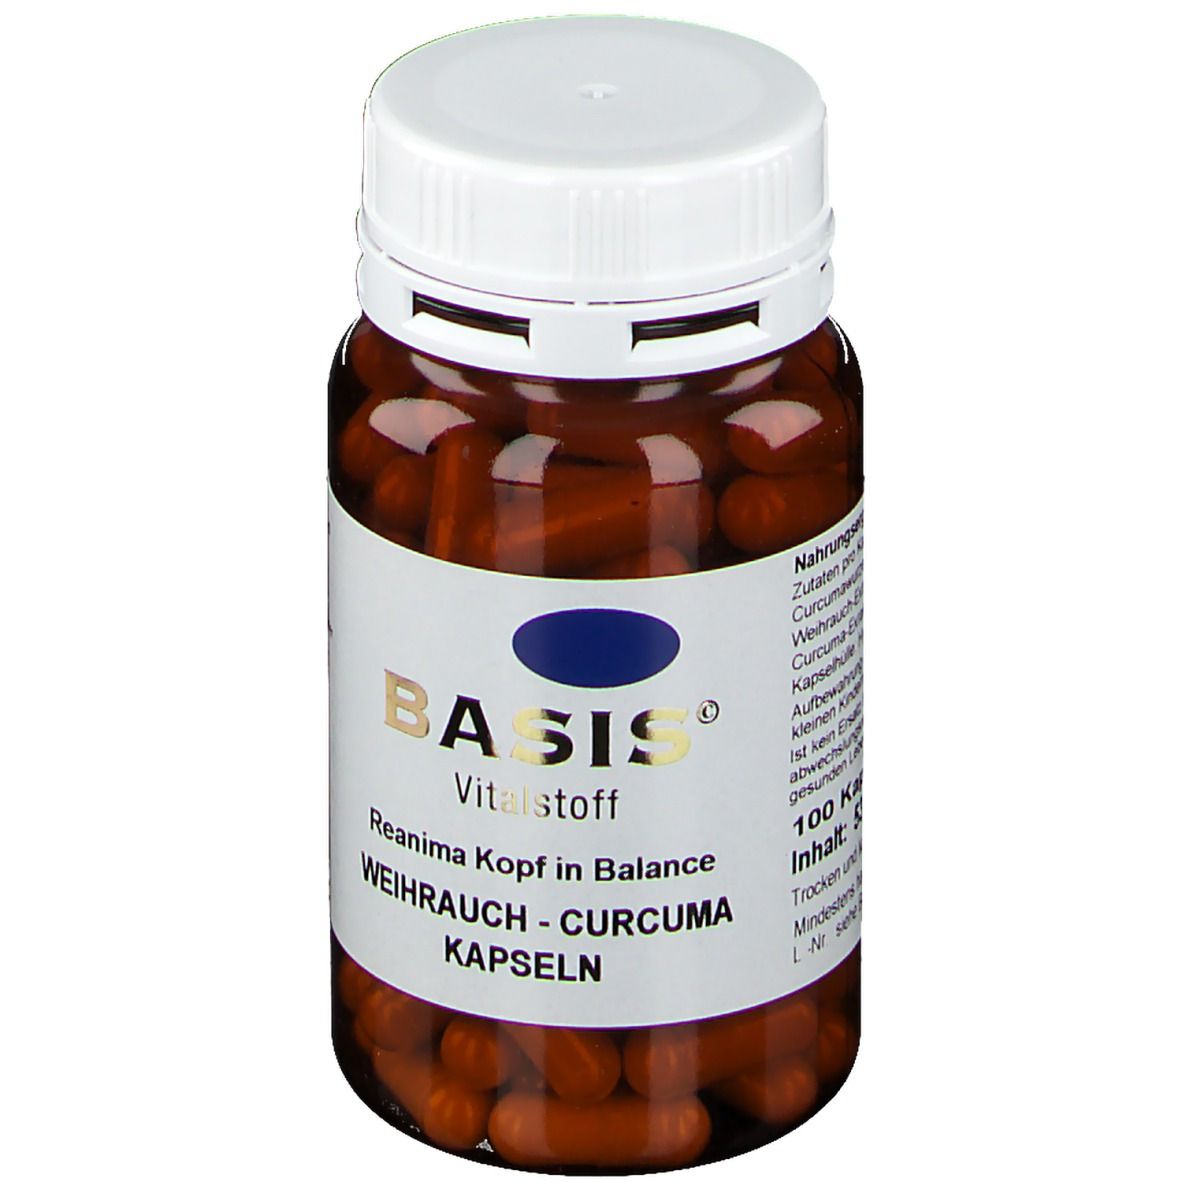 BASIS® Vitalstoff Reanima Kopf in Balance Weihrauch-Curcuma